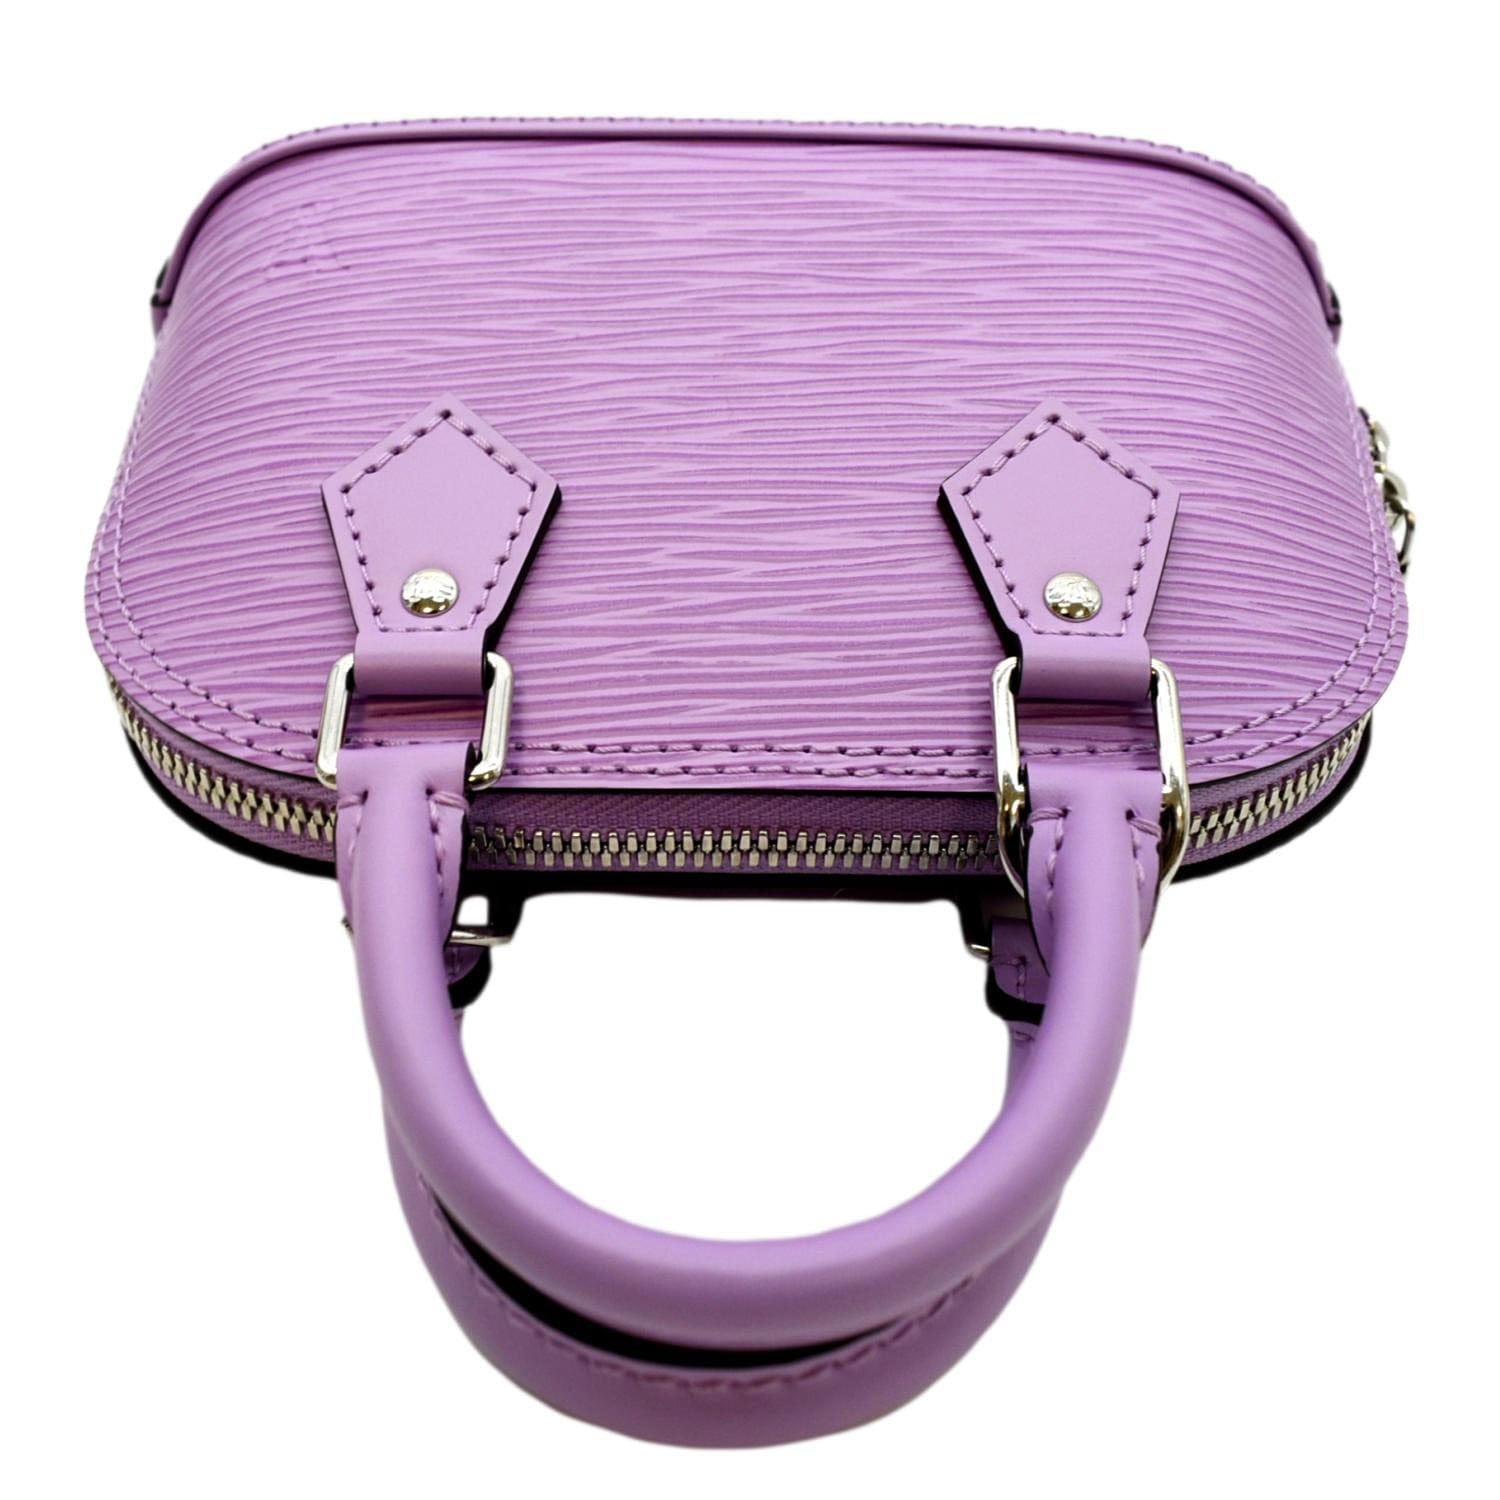 Handbags Louis Vuitton LV Alma EPI Pink New